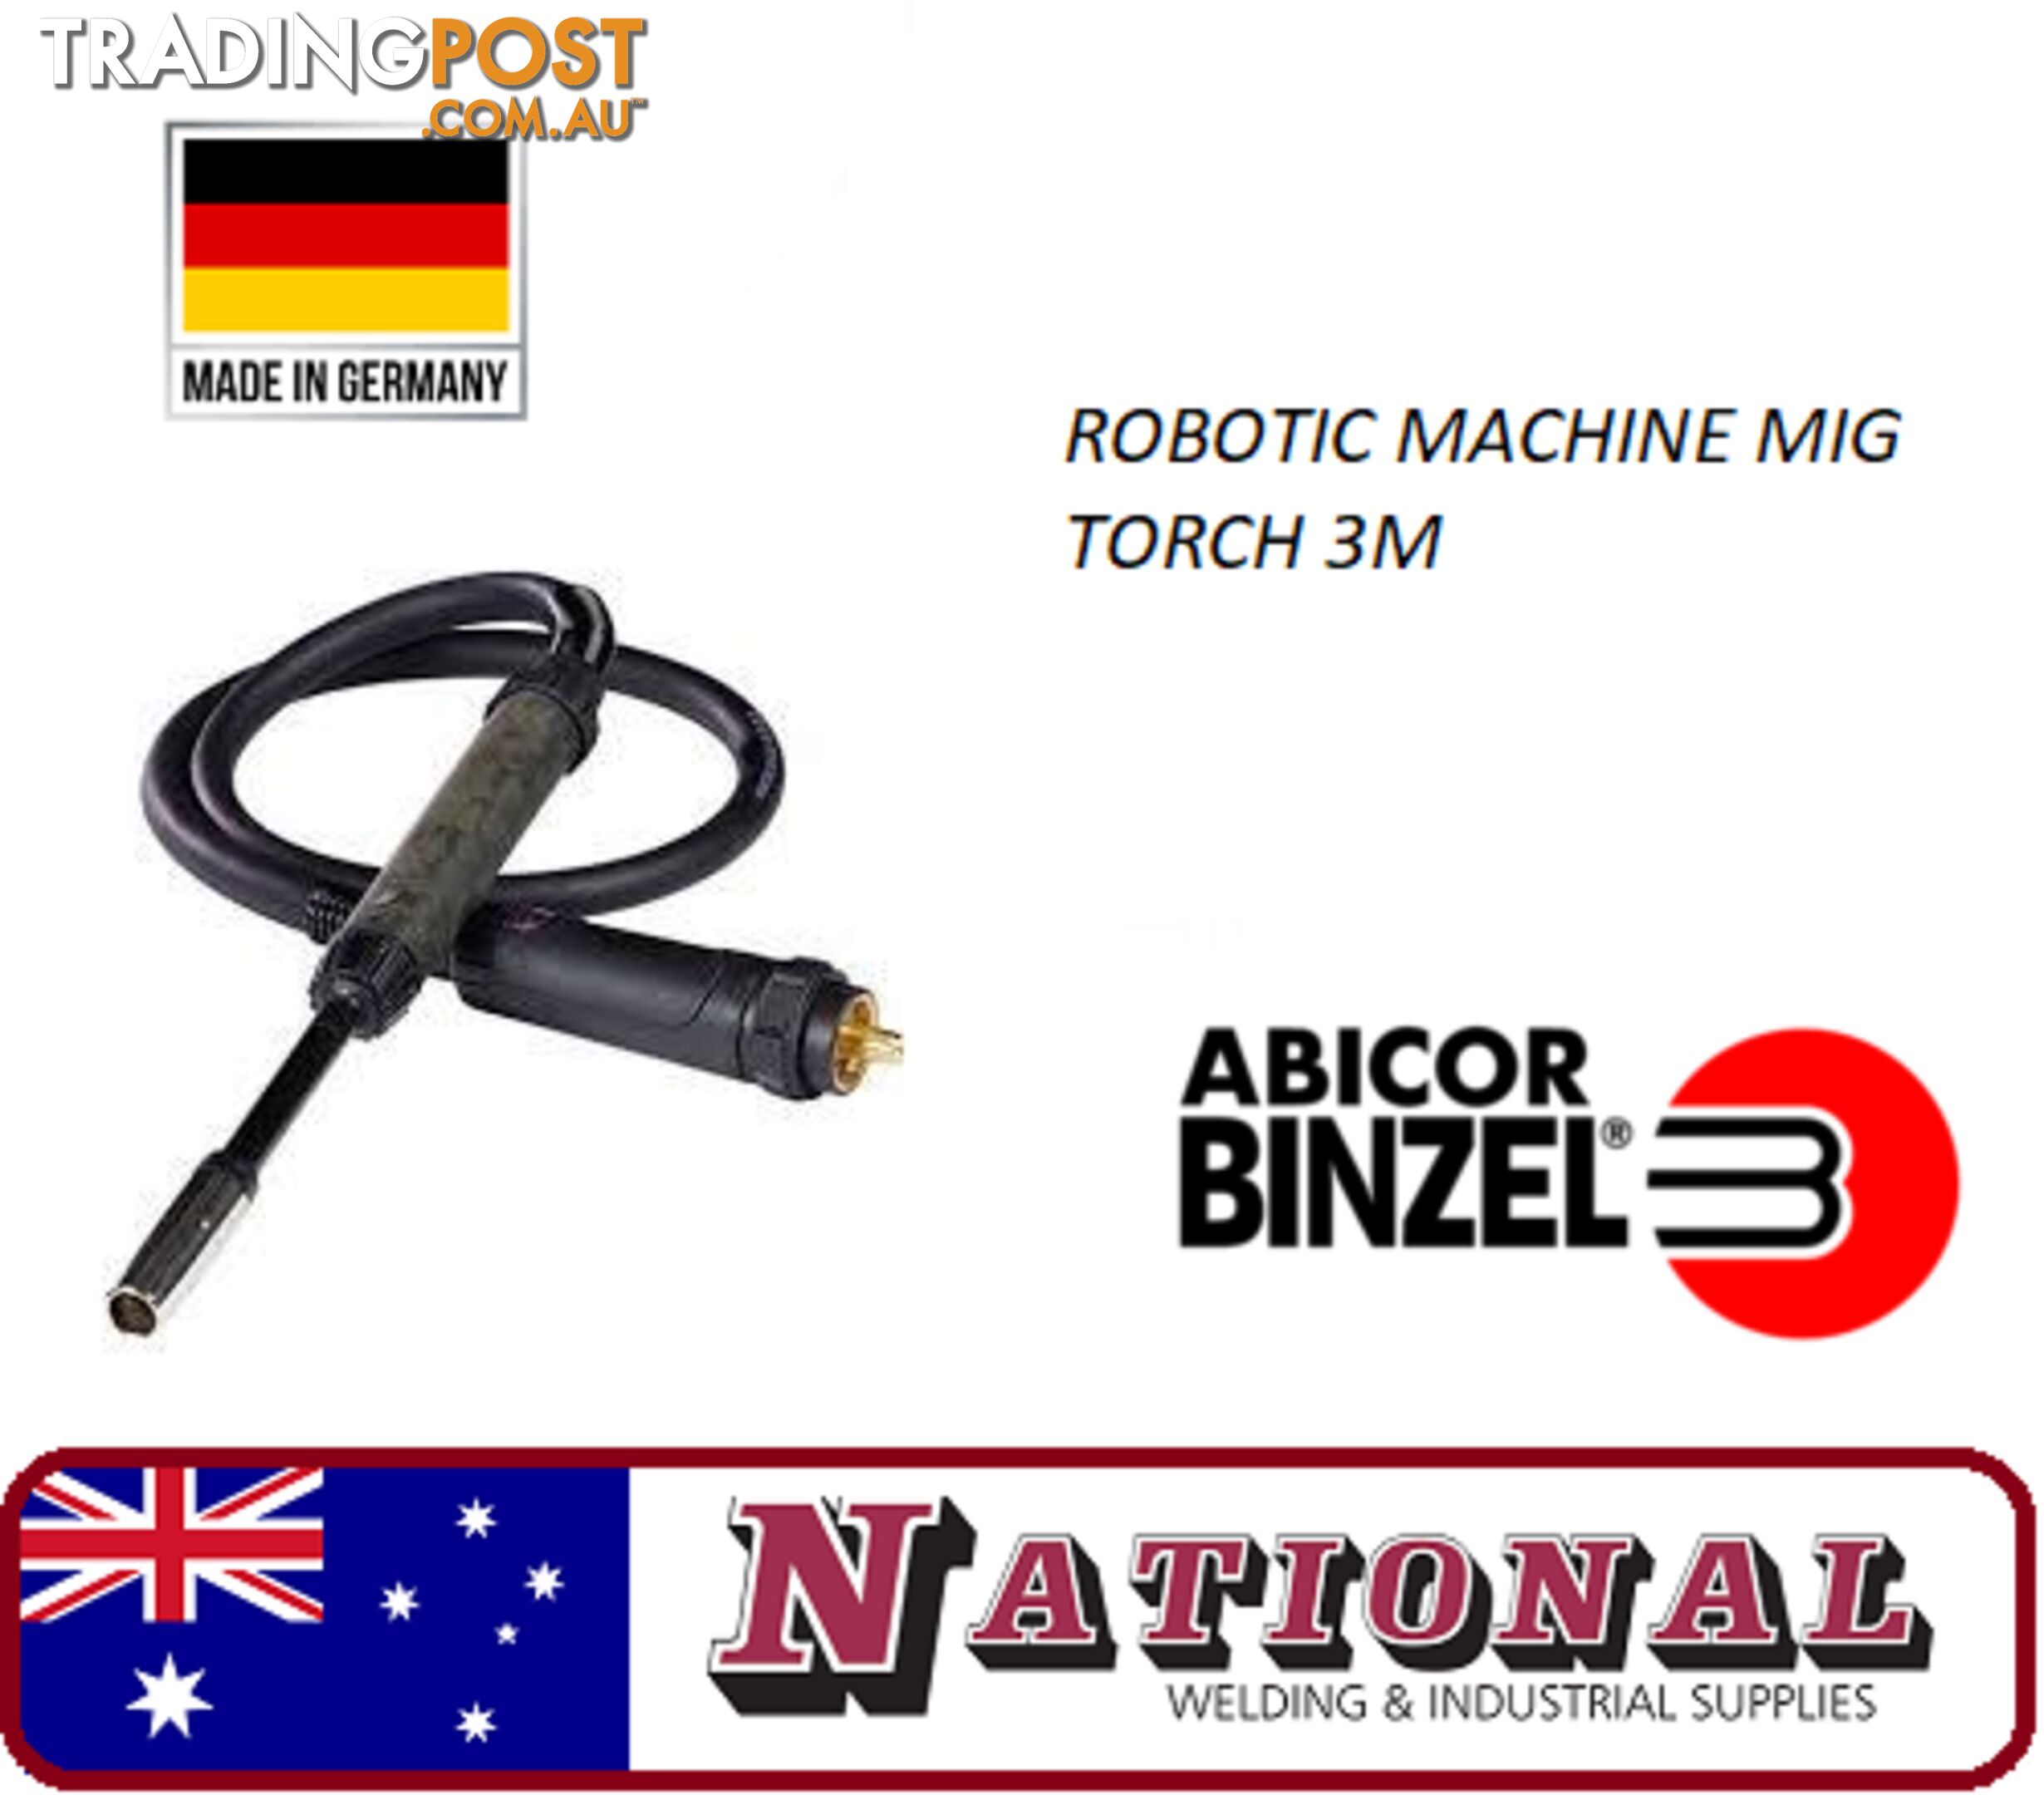 Robotic Mig Torch 3 Metres With Straight Neck Abimig MTG 455 T KZ-2 Binzel 916.D005.1